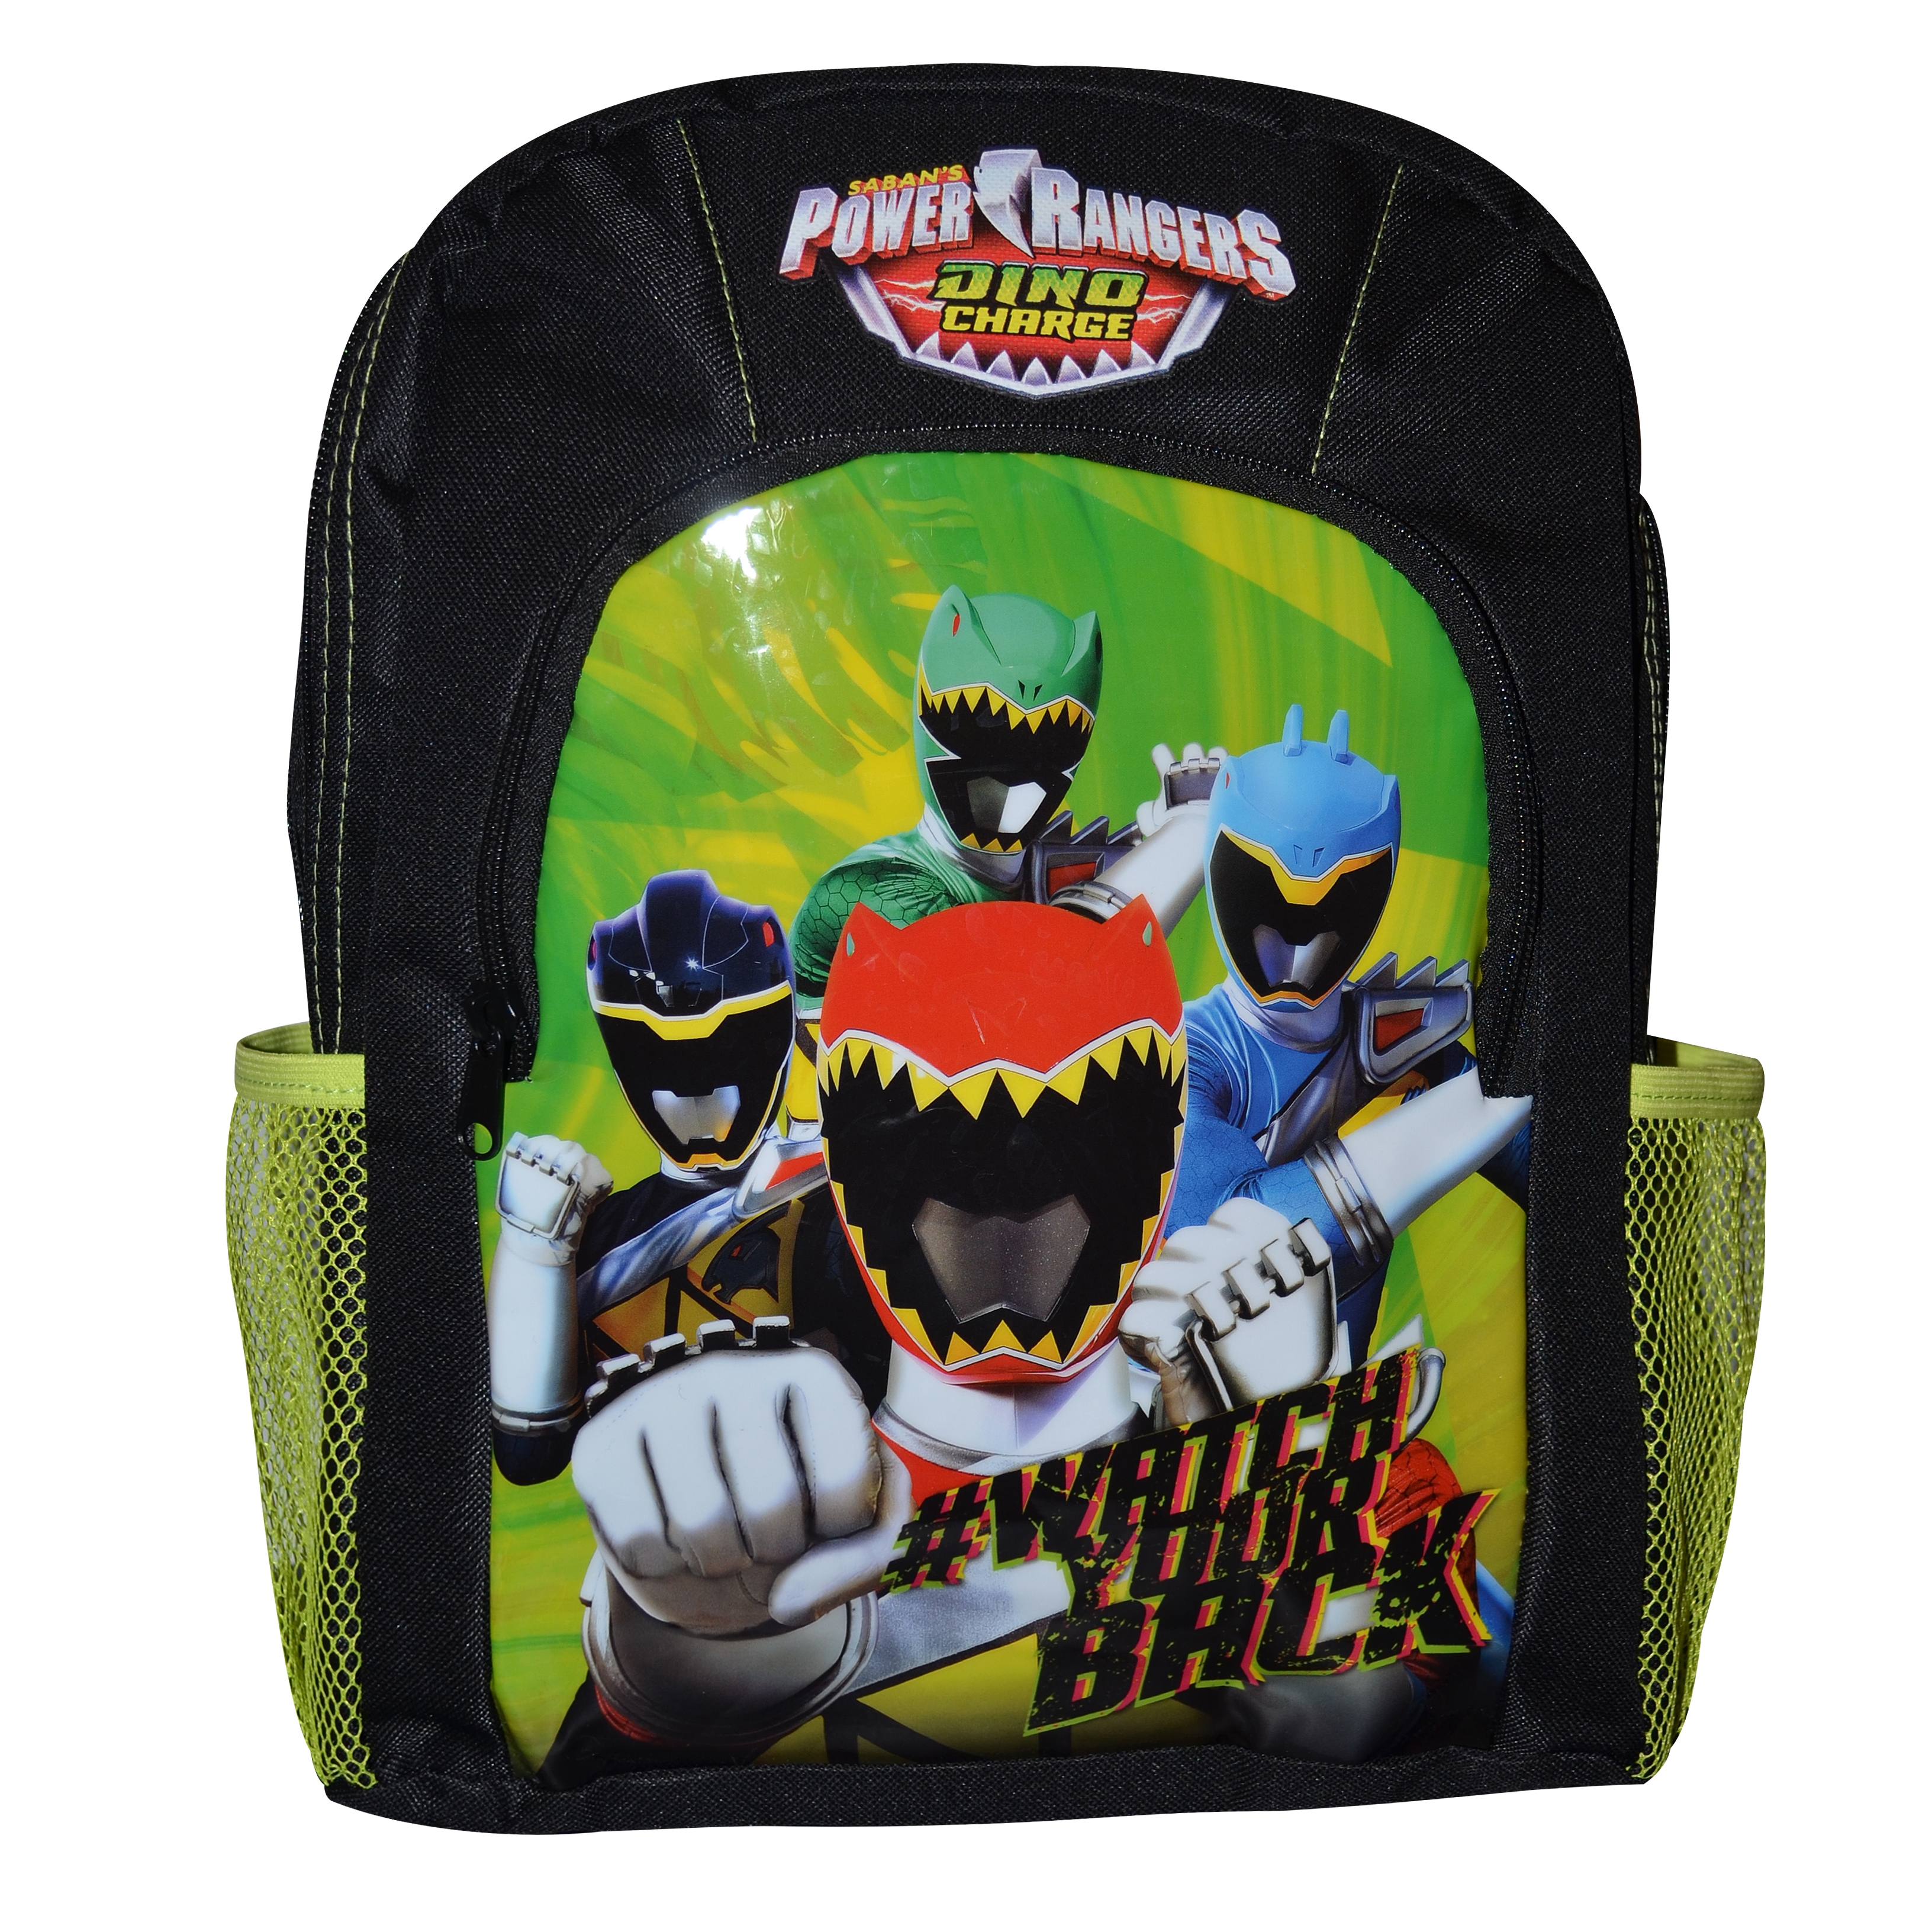 Power Rangers 'Dino Charge' School Bag Rucksack Backpack